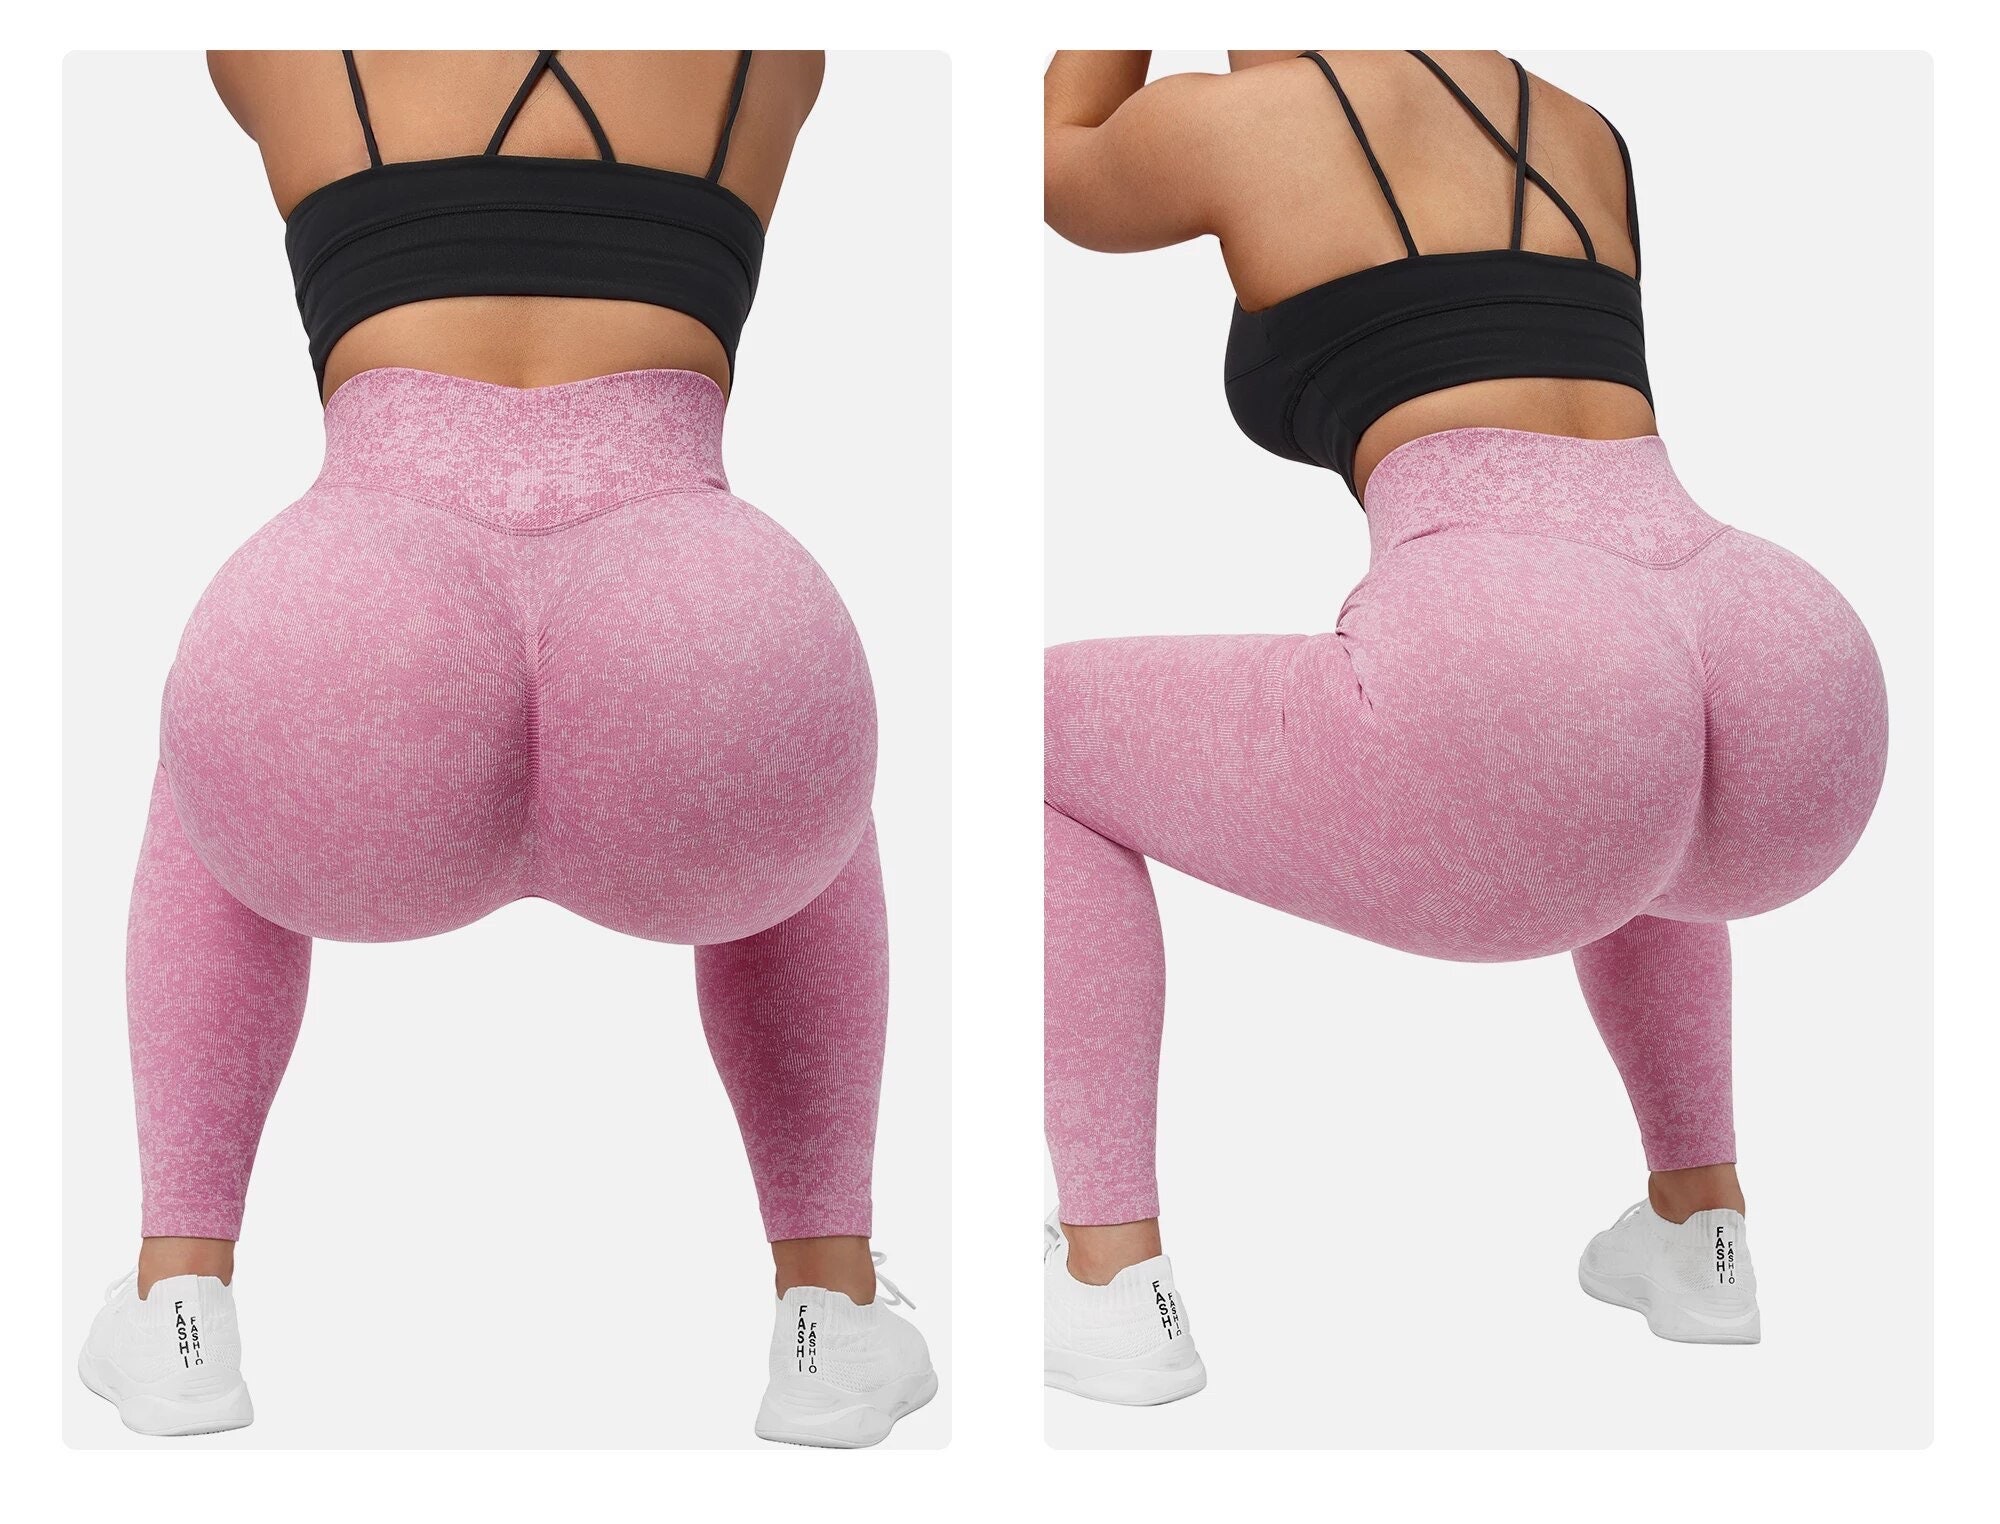 LELINTA Women's High Waist Yoga Pants Textured Ruched Butt Lifting